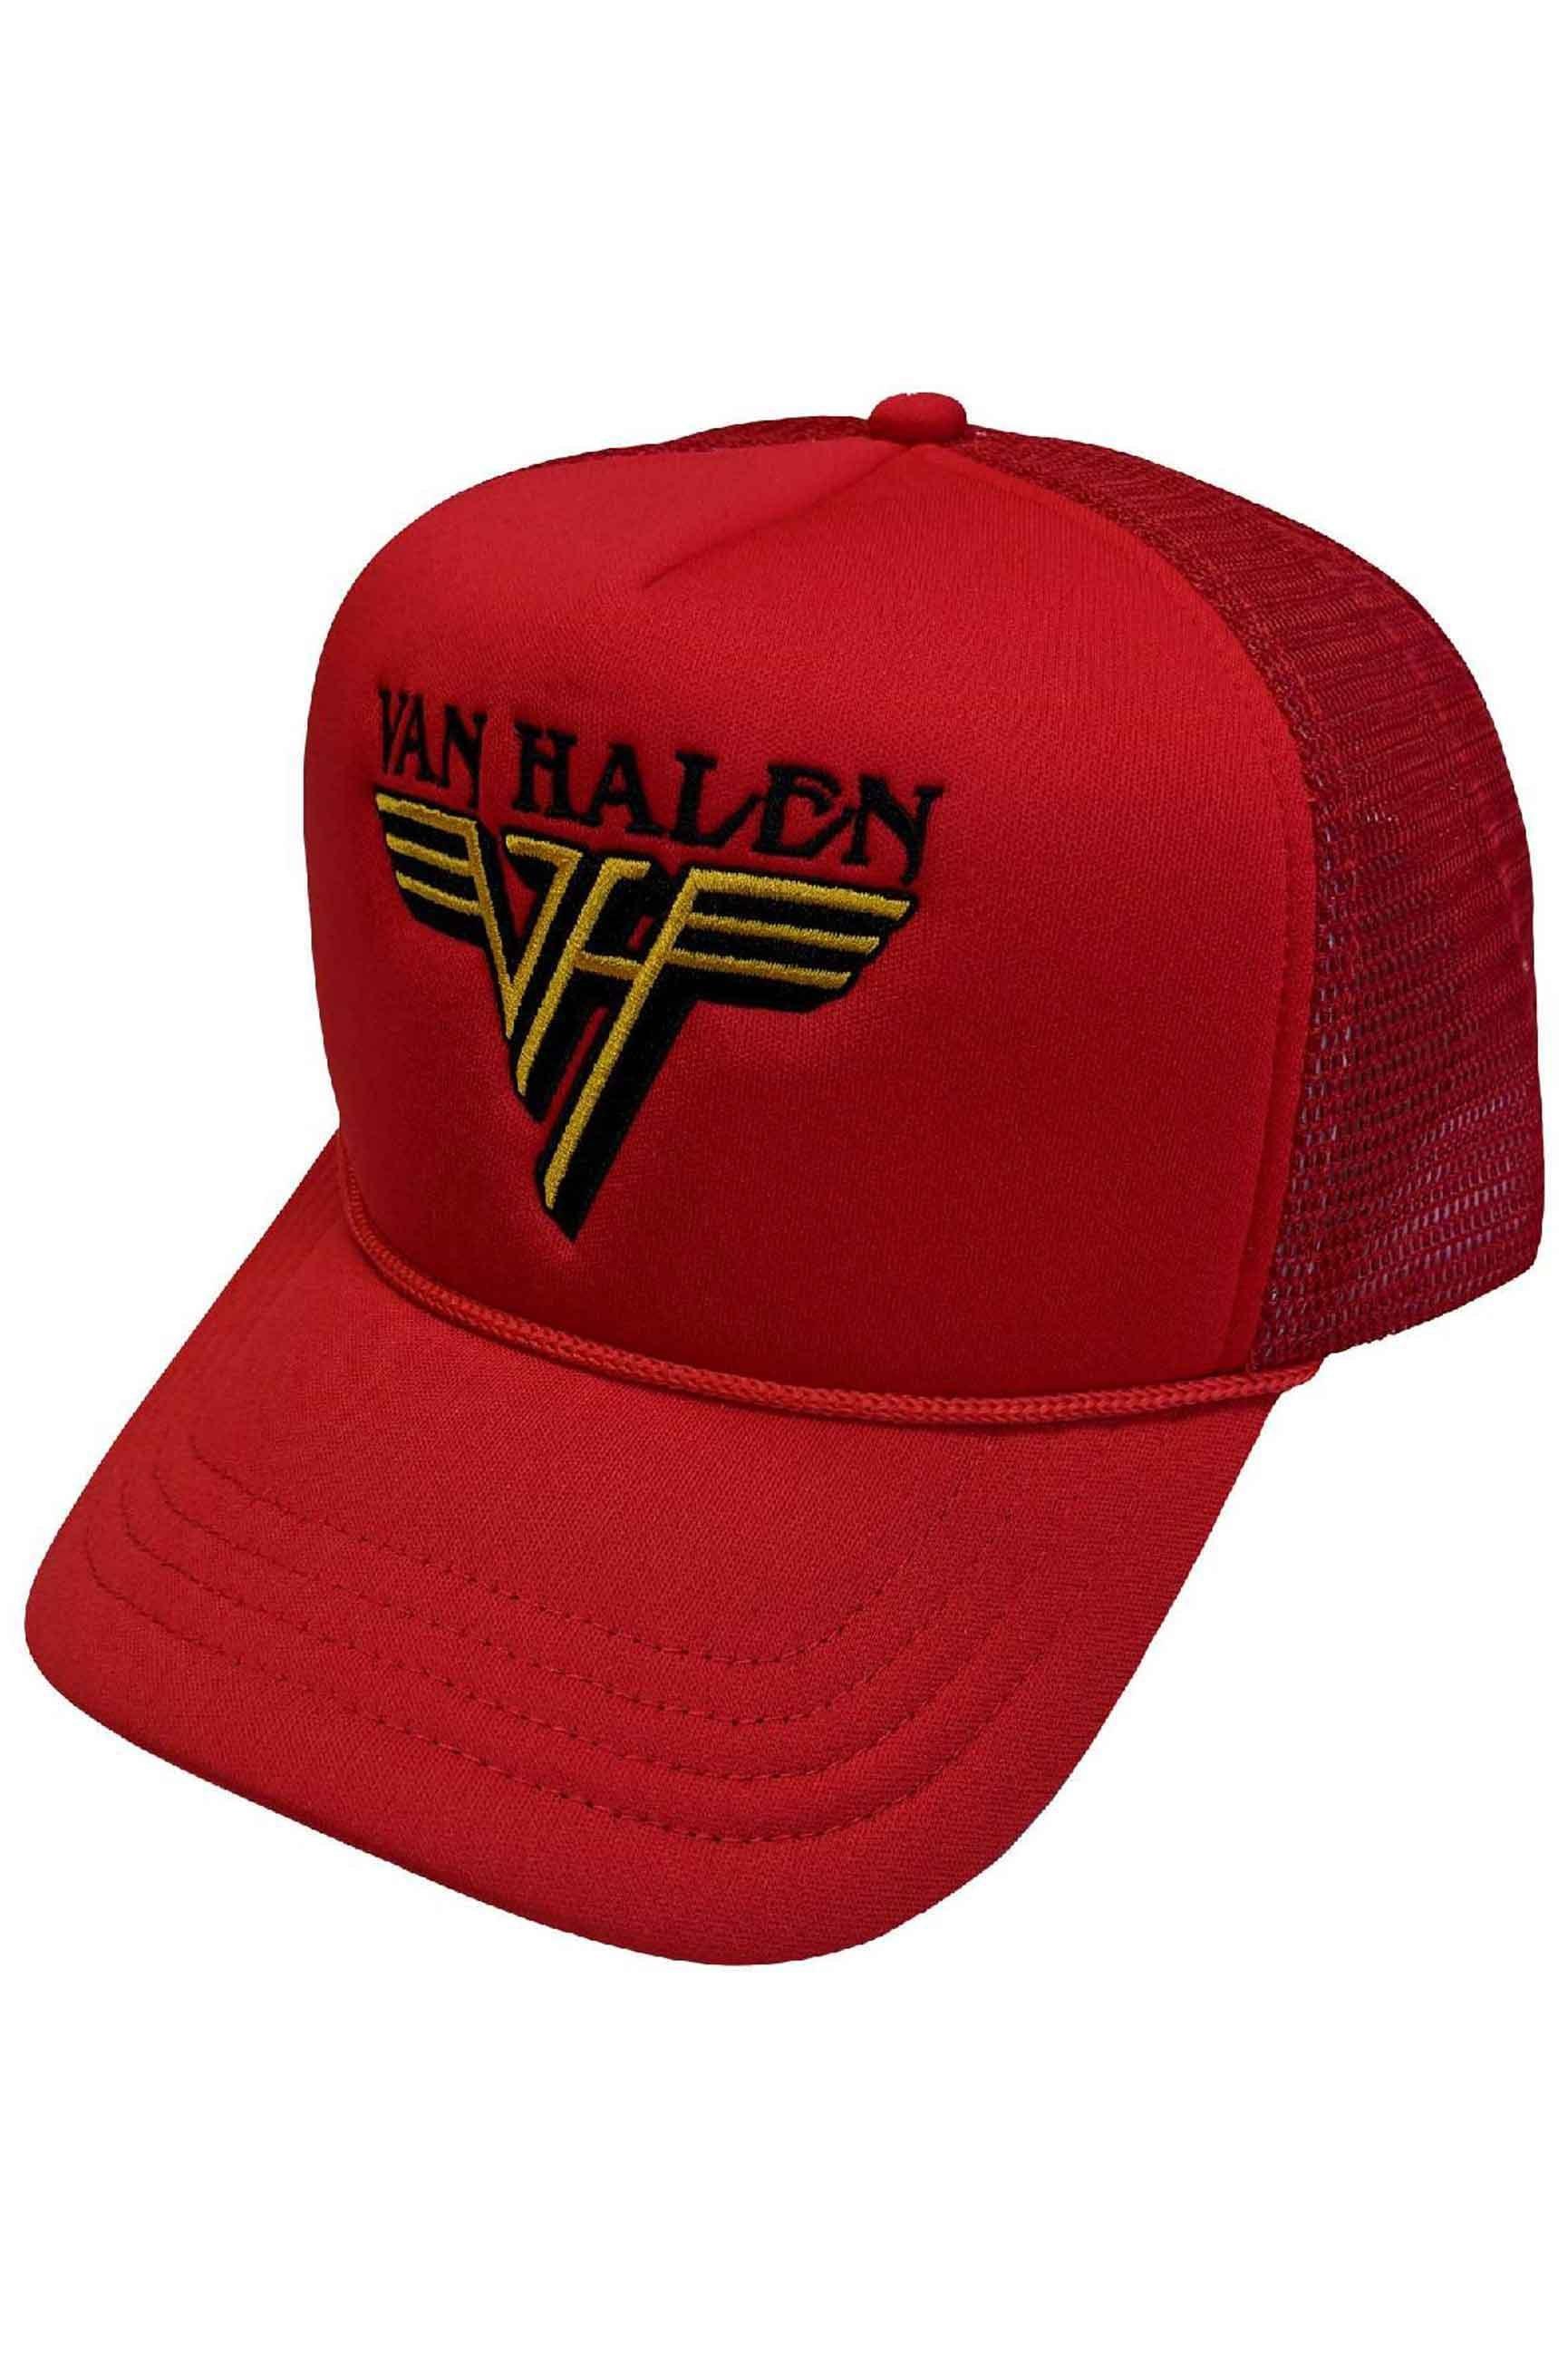 Бейсбольная кепка Trucker с текстовым ремешком и логотипом Van Halen, красный van halen van halen ii vinyl 180 gram